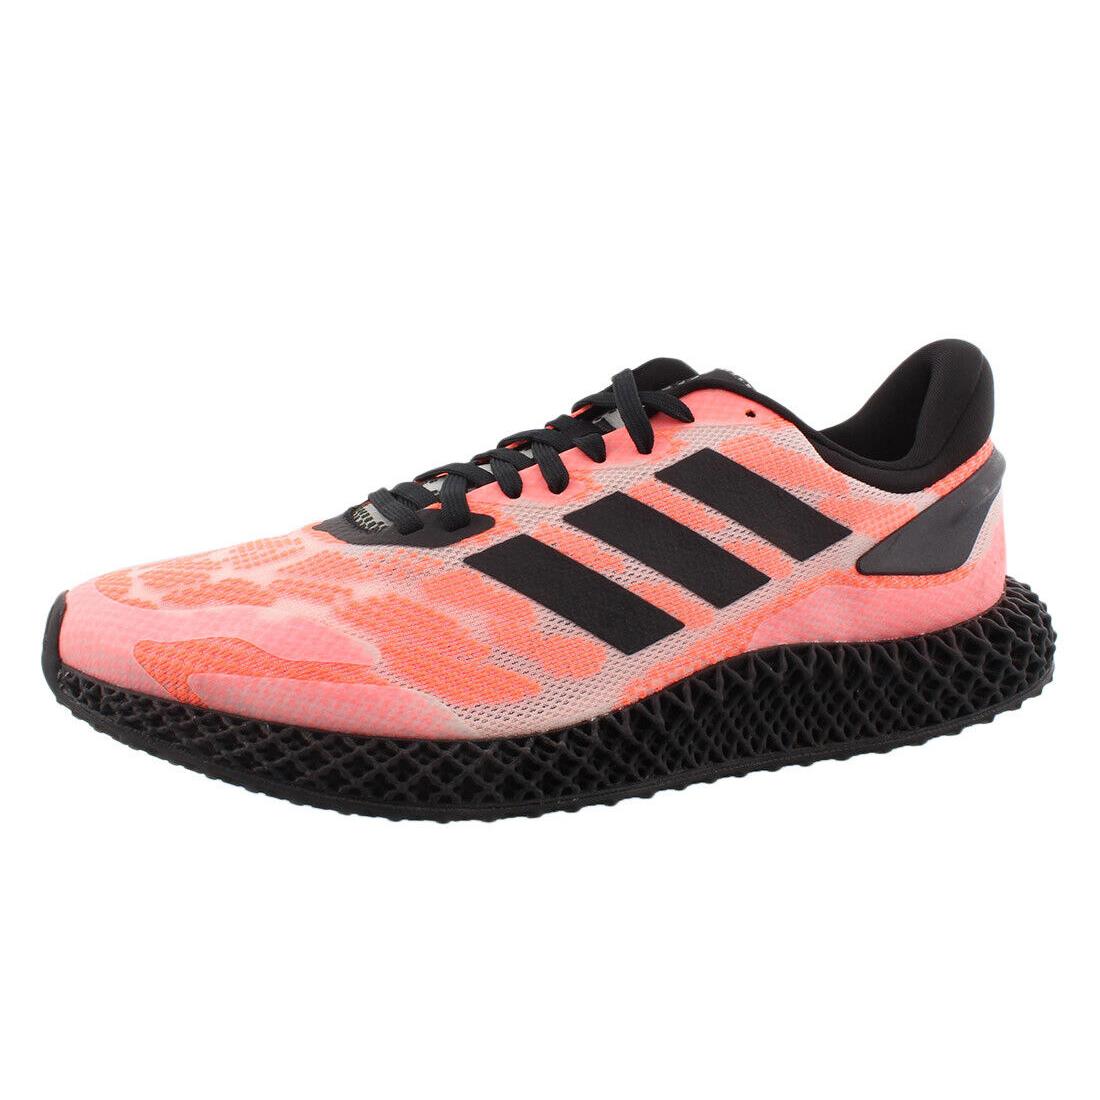 Adidas 4D Runner Mens Shoes Size 11.5 Color: Pink/black - Pink/Black, Main: Pink